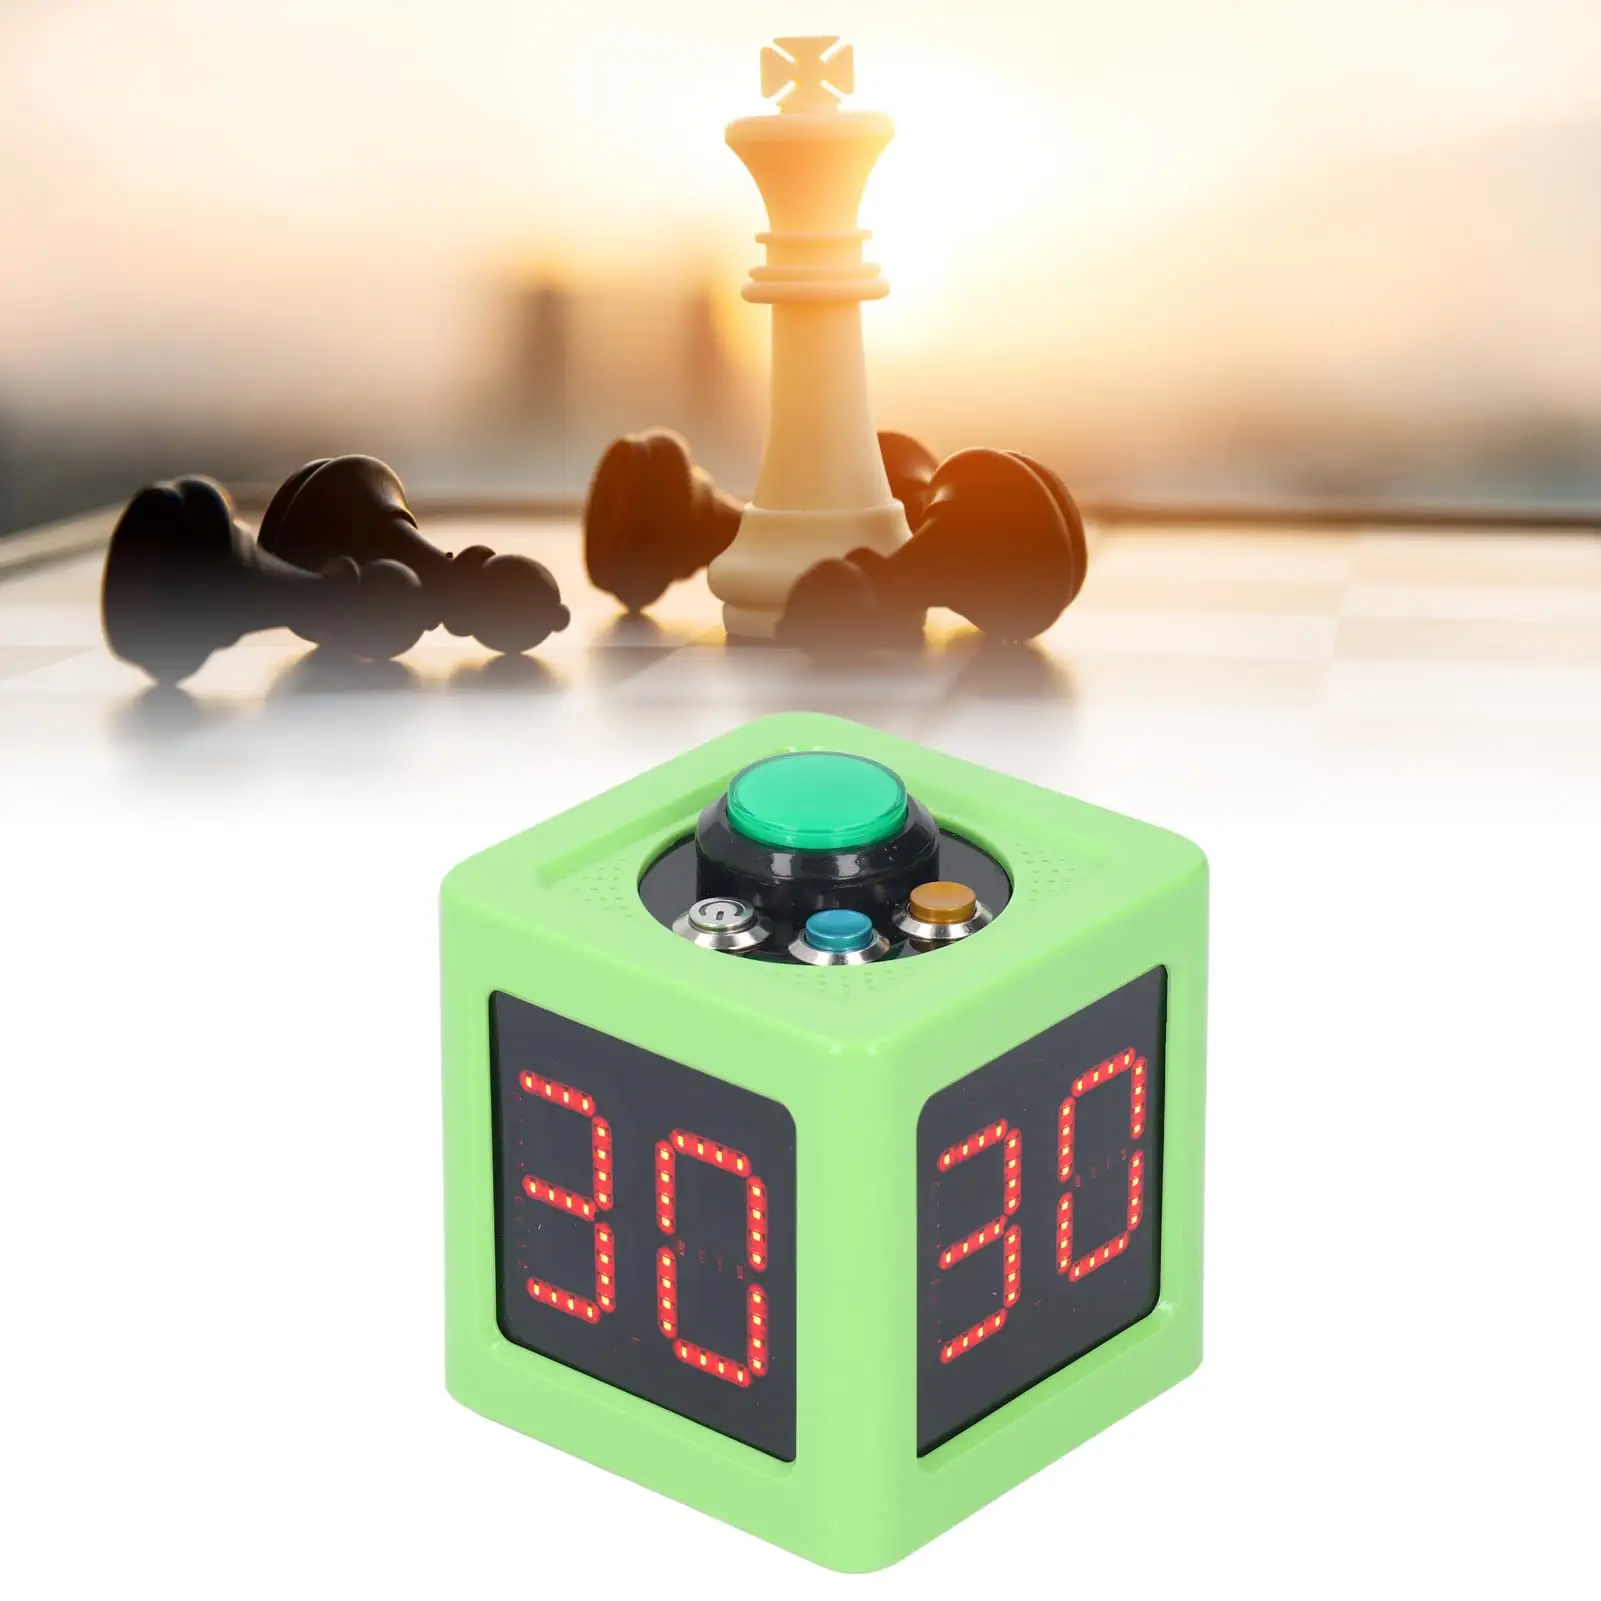 YIZHI LED الموقت الرقمي لشطرنج البوكر، ساعة مع شمرة الغيار من 0-99 ثانية لمحترفي البوكر والكازينو وسباق الشطرنج